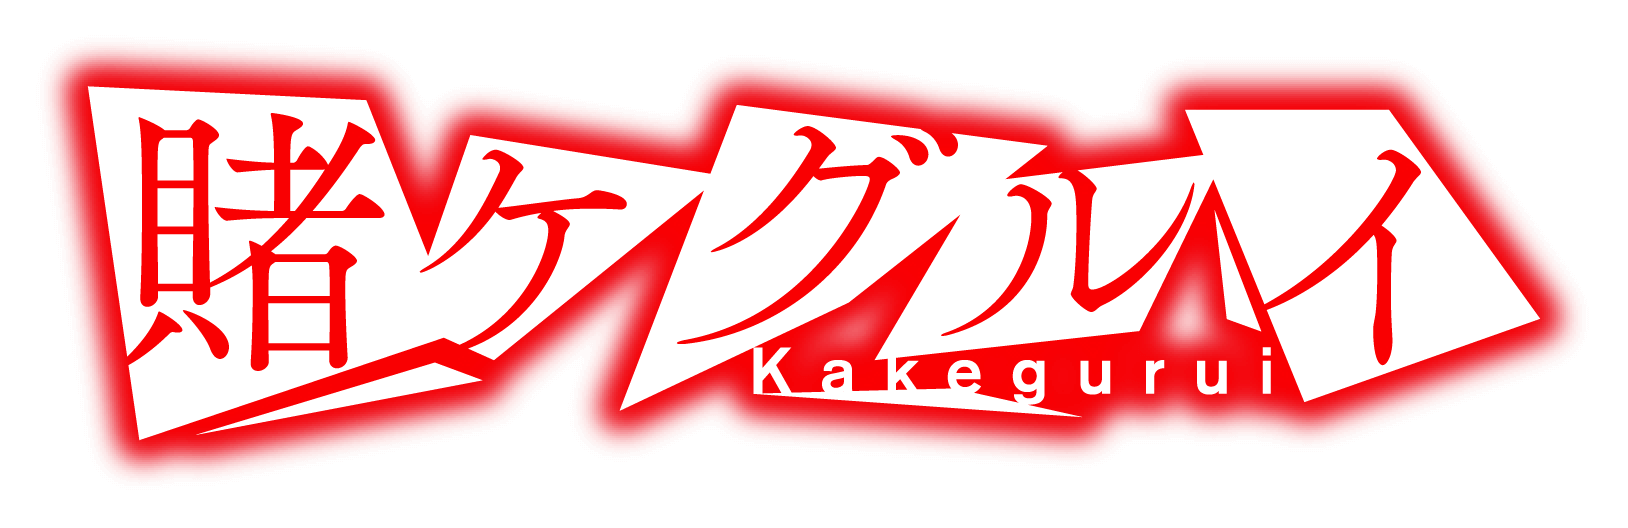 Kakegurui drama coming to Netflix May 4 | ResetEra